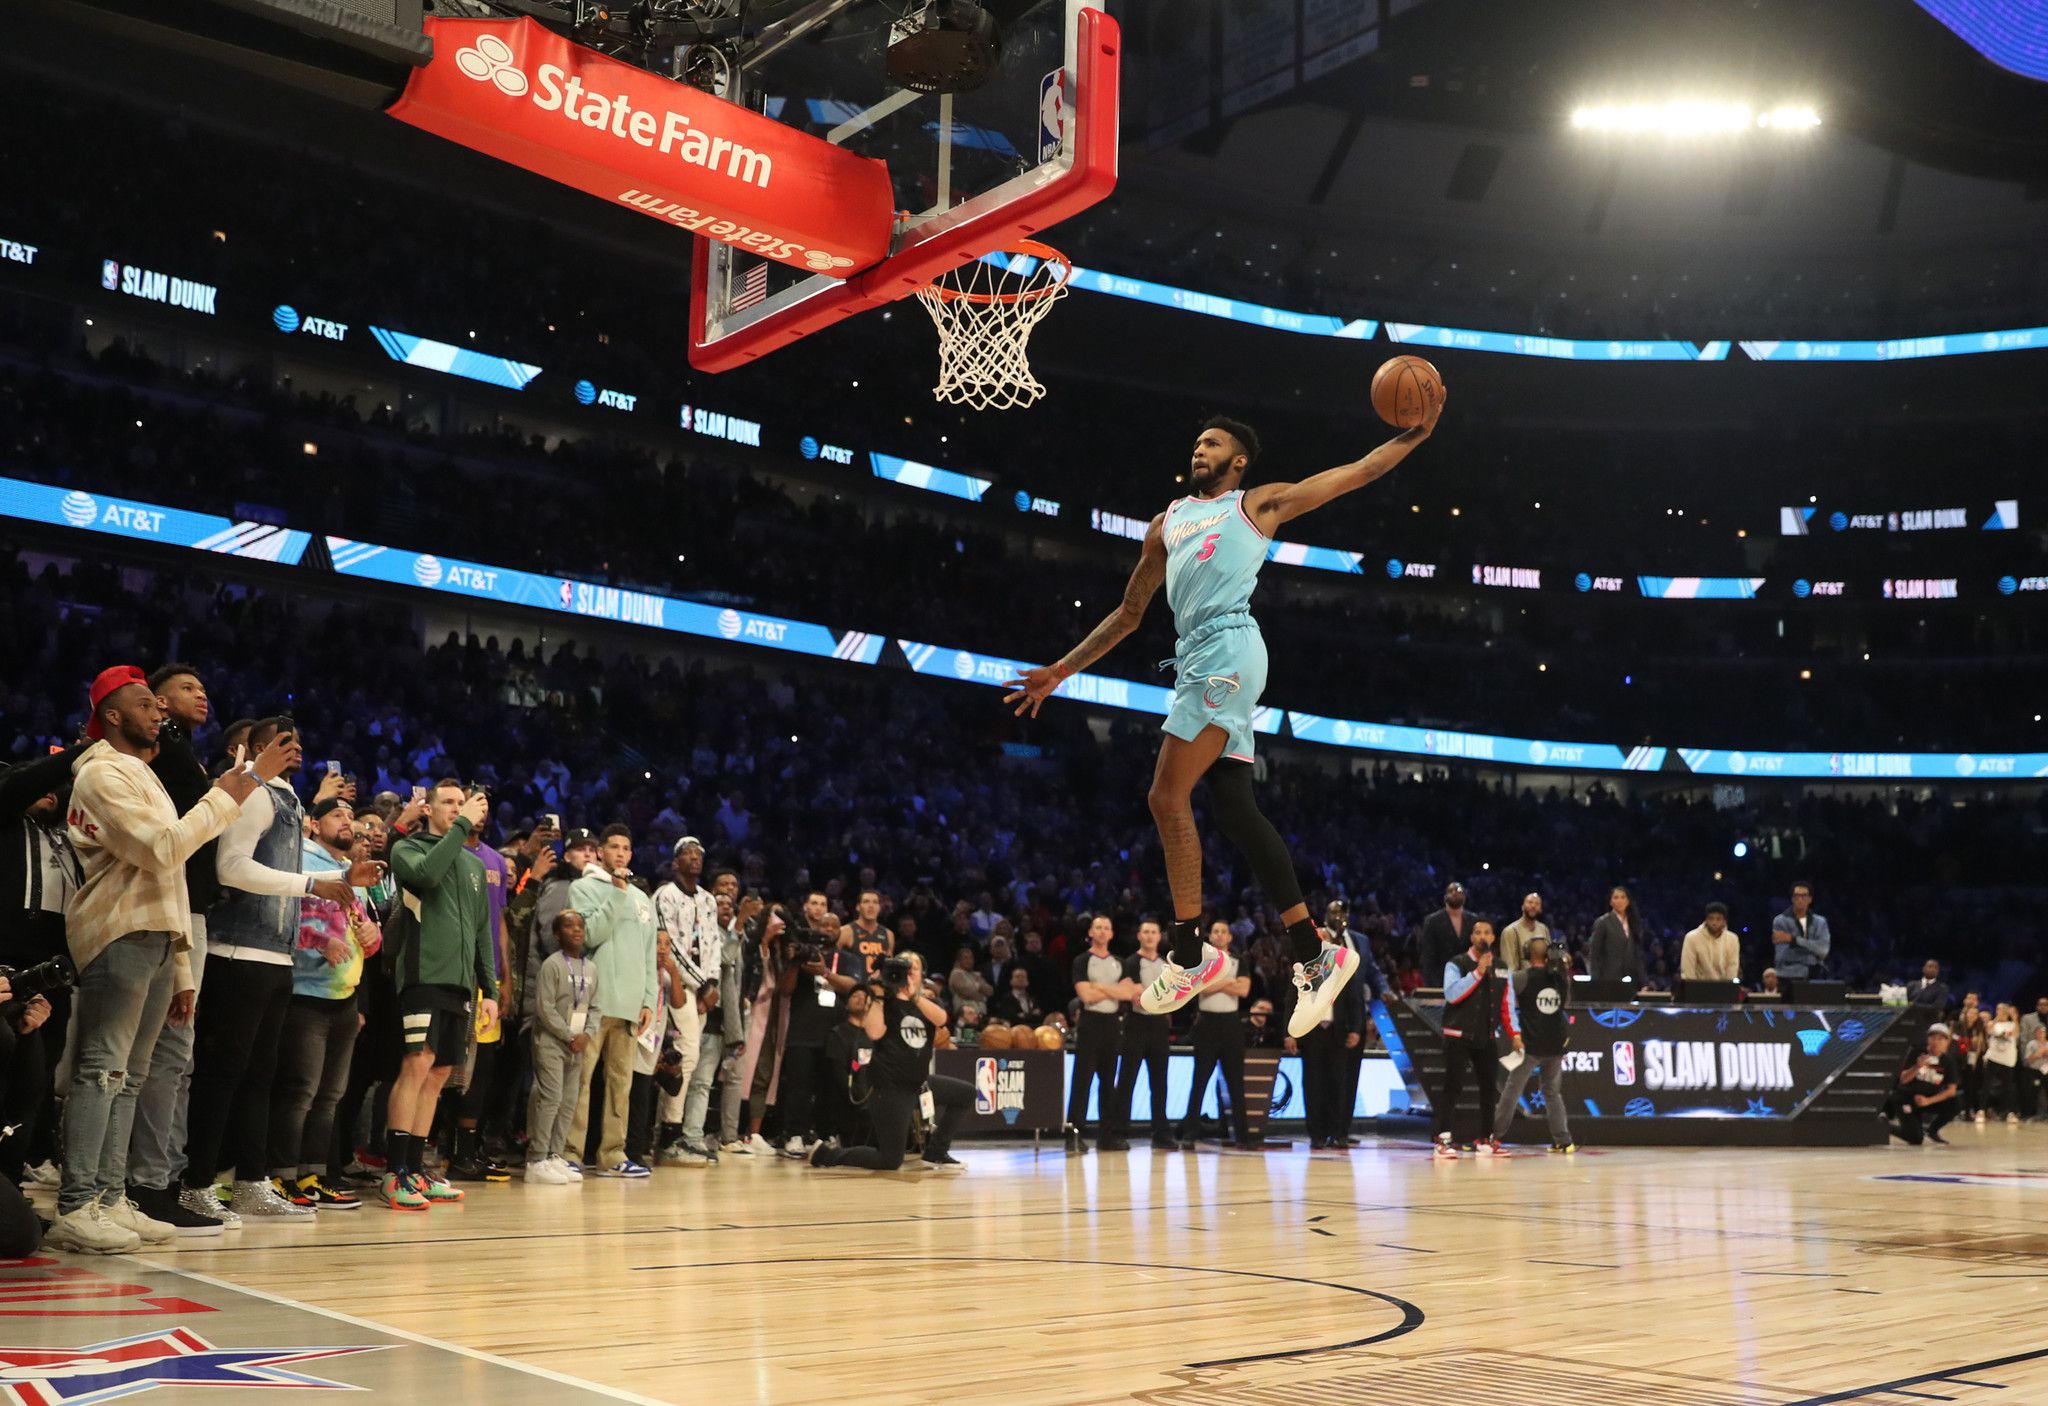 Derrick Jones Jr wins NBA All-Star Slam Dunk Contest over Aaron